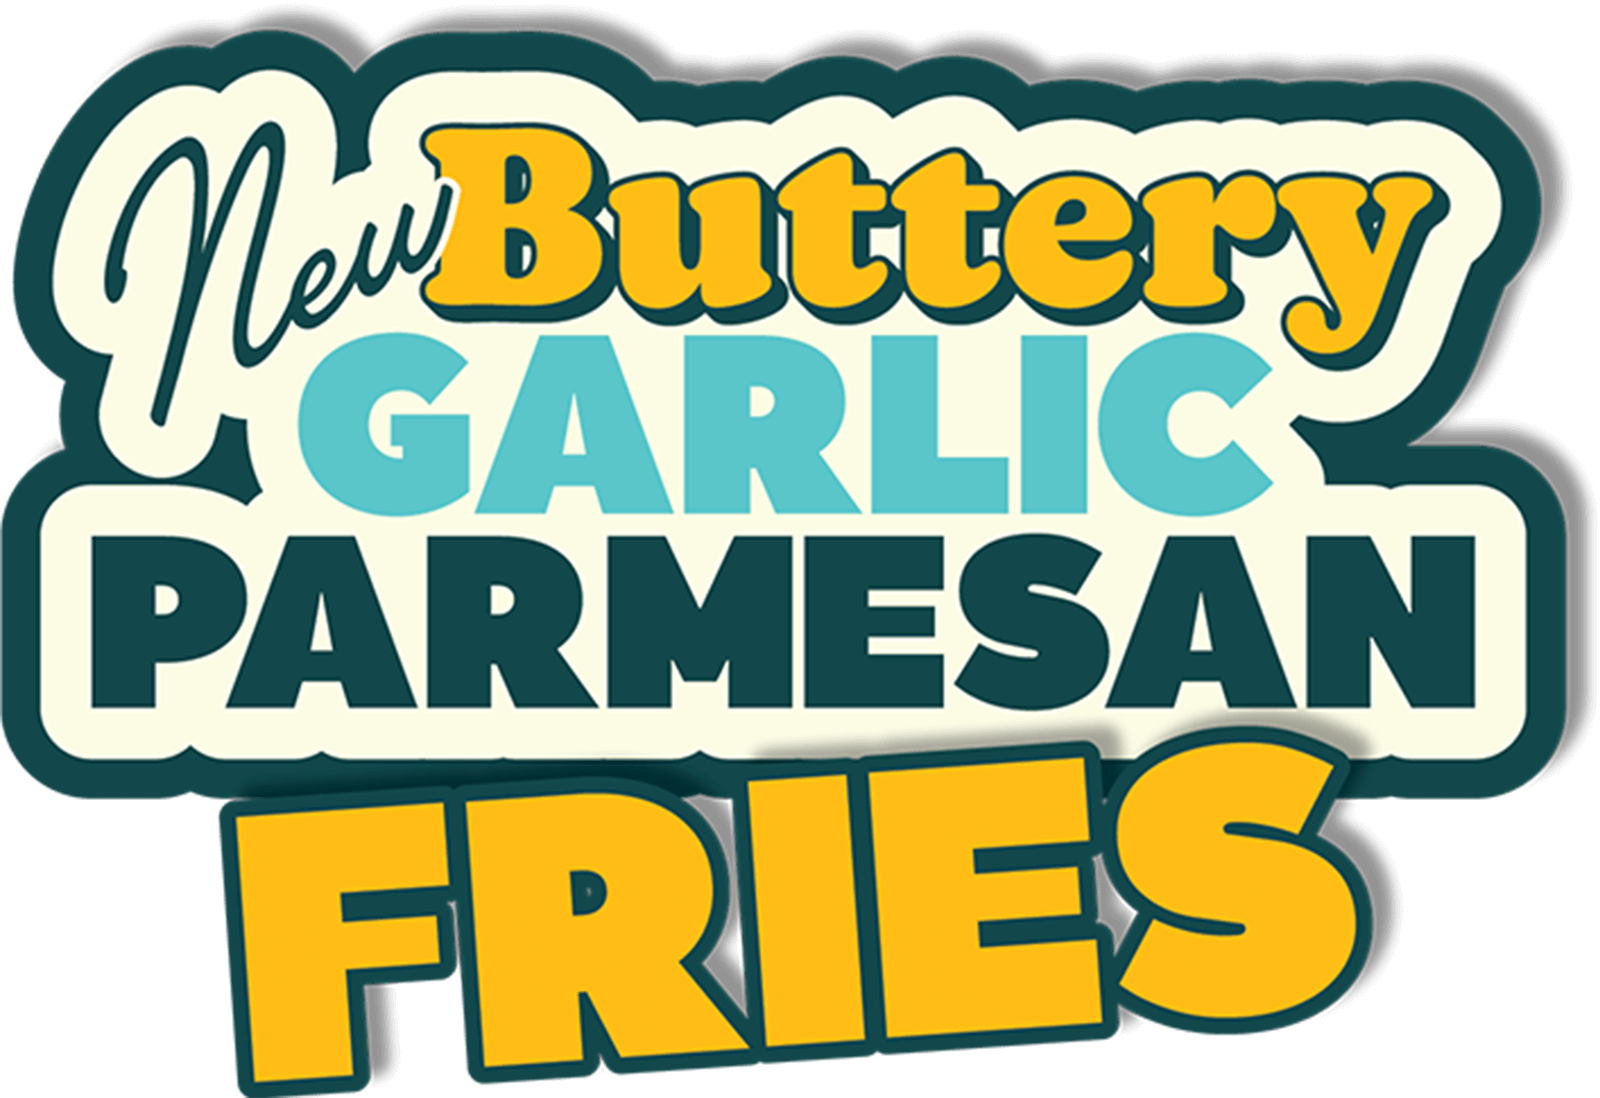 New Buttery Garlic Parmesan Fries